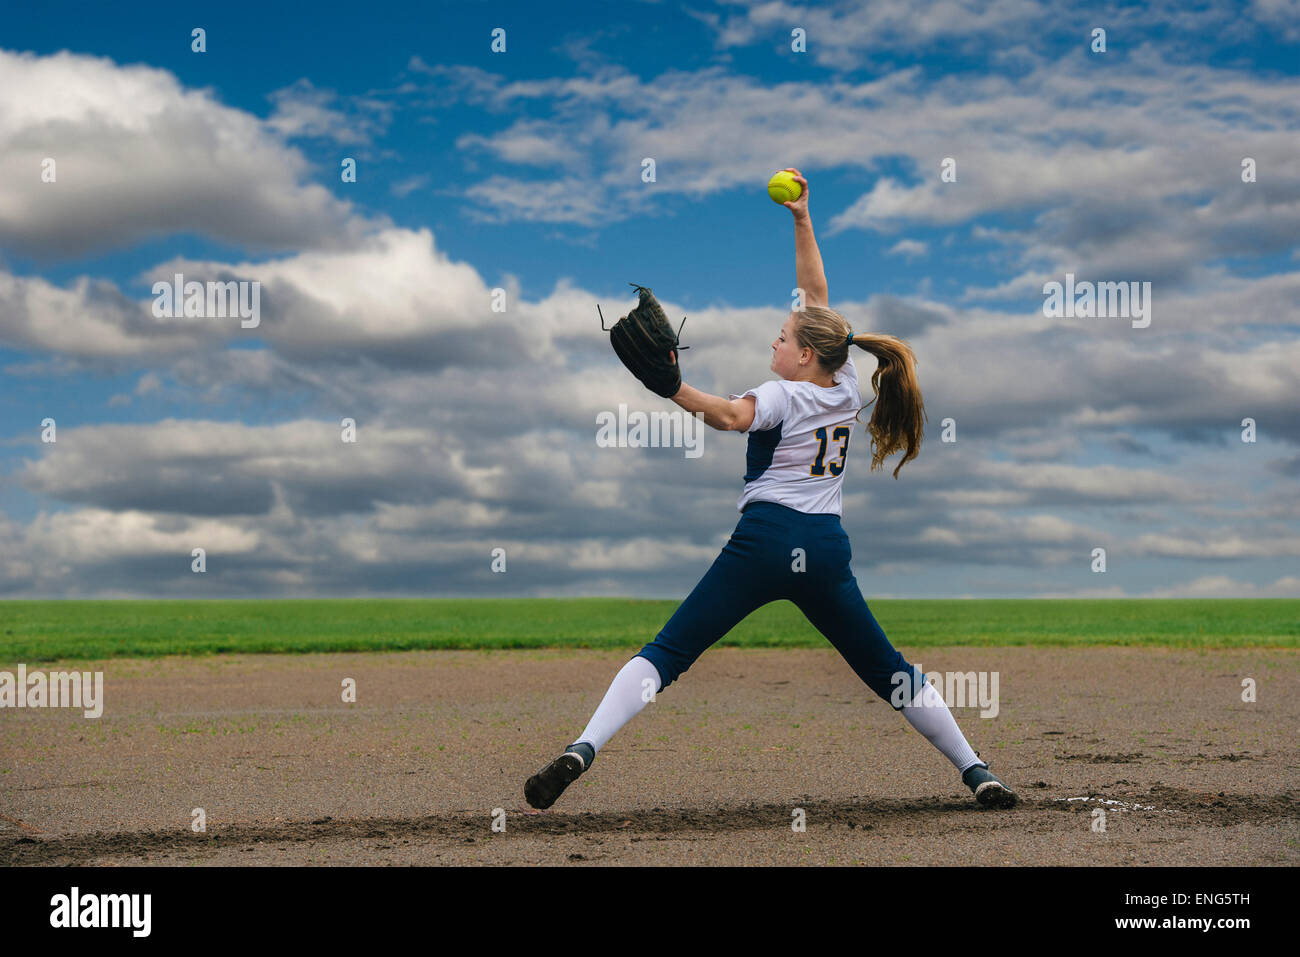 Caucasian softball player pitching ball in field Stock Photo